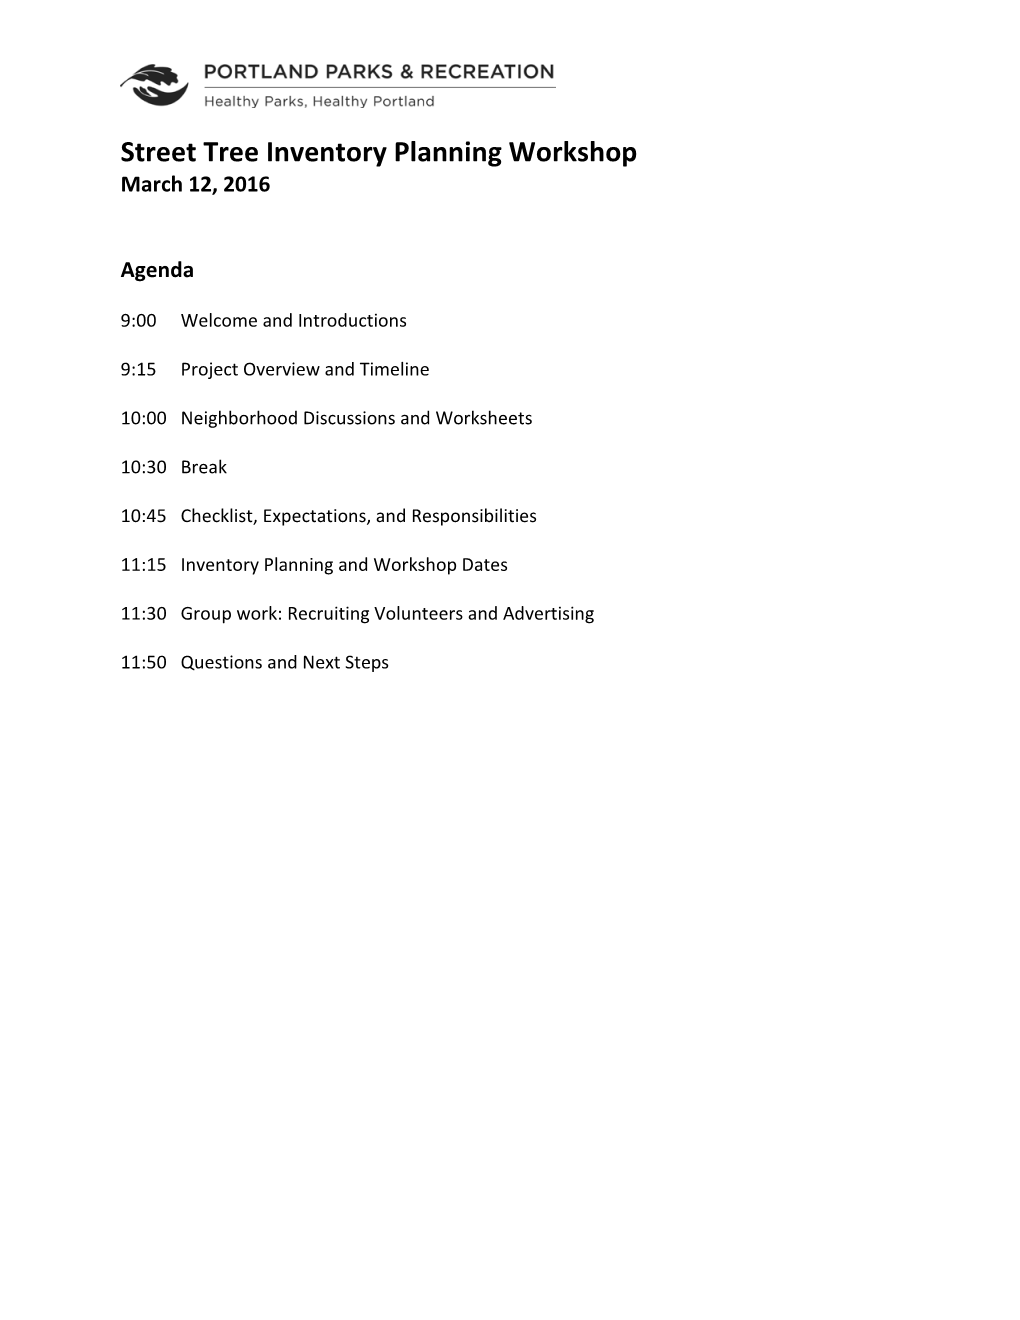 Street Tree Inventory Planning Workshop March 12, 2016